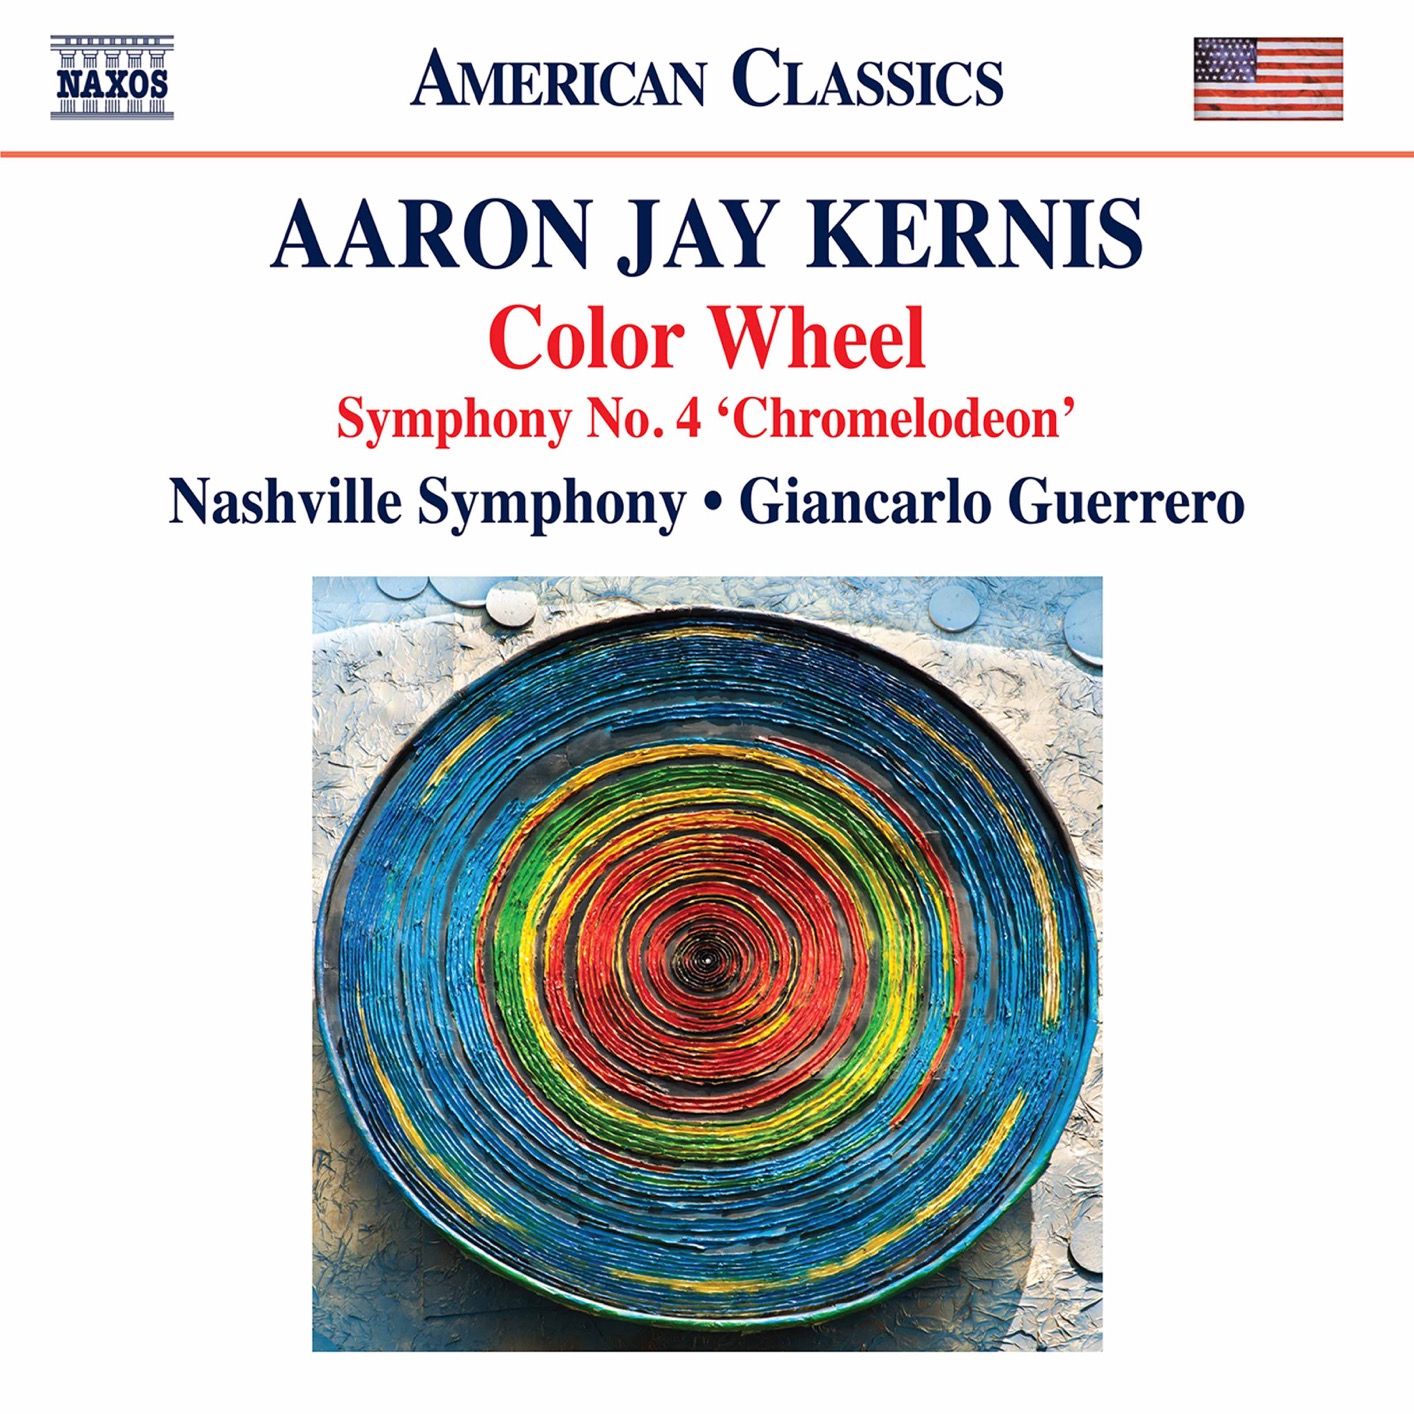 Nashville Symphony, Giancarlo Guerrero – Aaron Jay Kernis – Color Wheel – Symphony No. 4 ”Chromelodeon” (Live) (2020) [FLAC 24bit/96kHz]